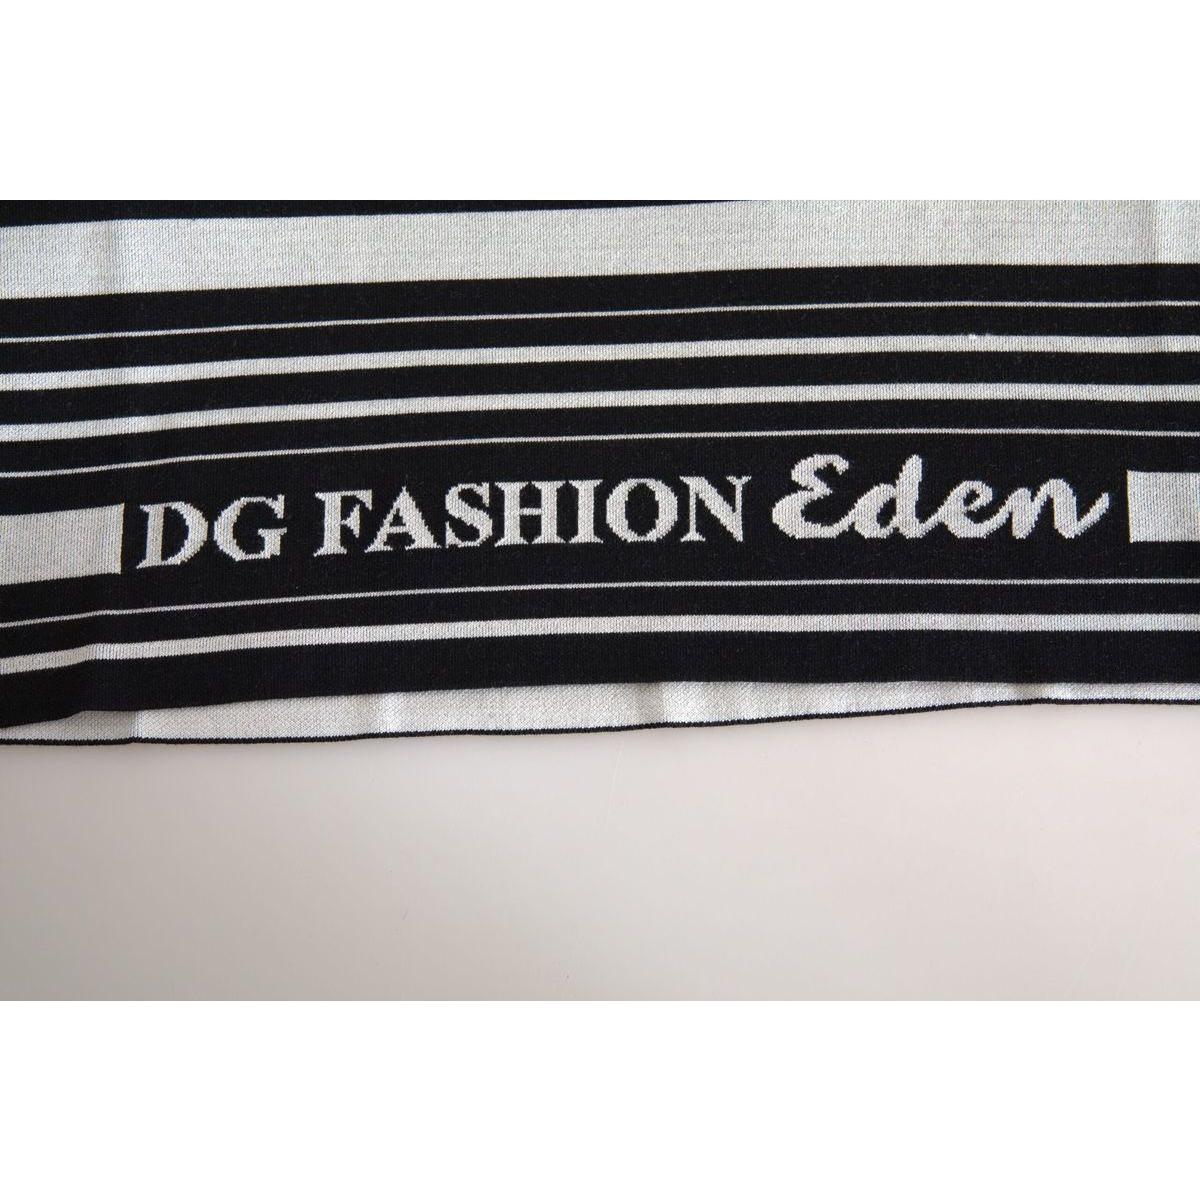 Dolce & Gabbana Elegant White Cotton Crew Neck Tee white-cotton-dg-fashion-crew-neck-tee-t-shirt